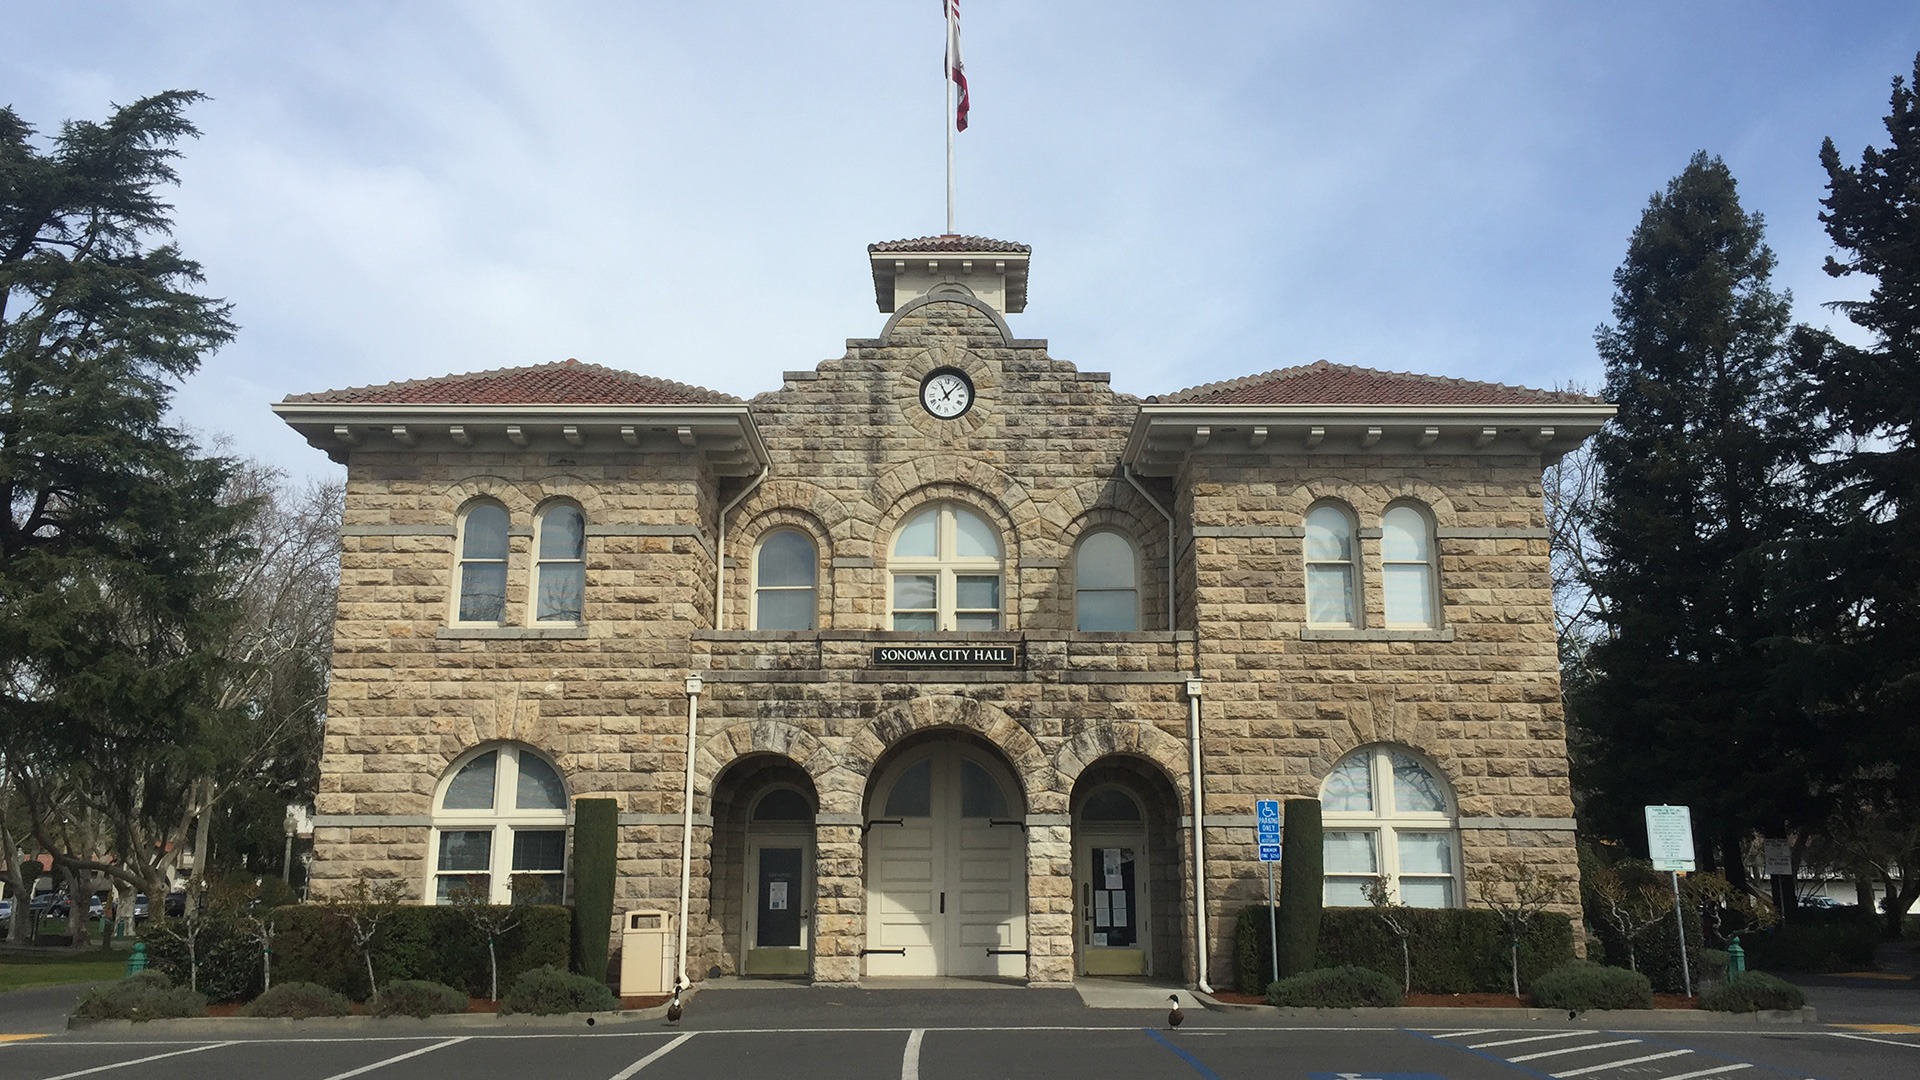 Town hall building in Sonoma, California